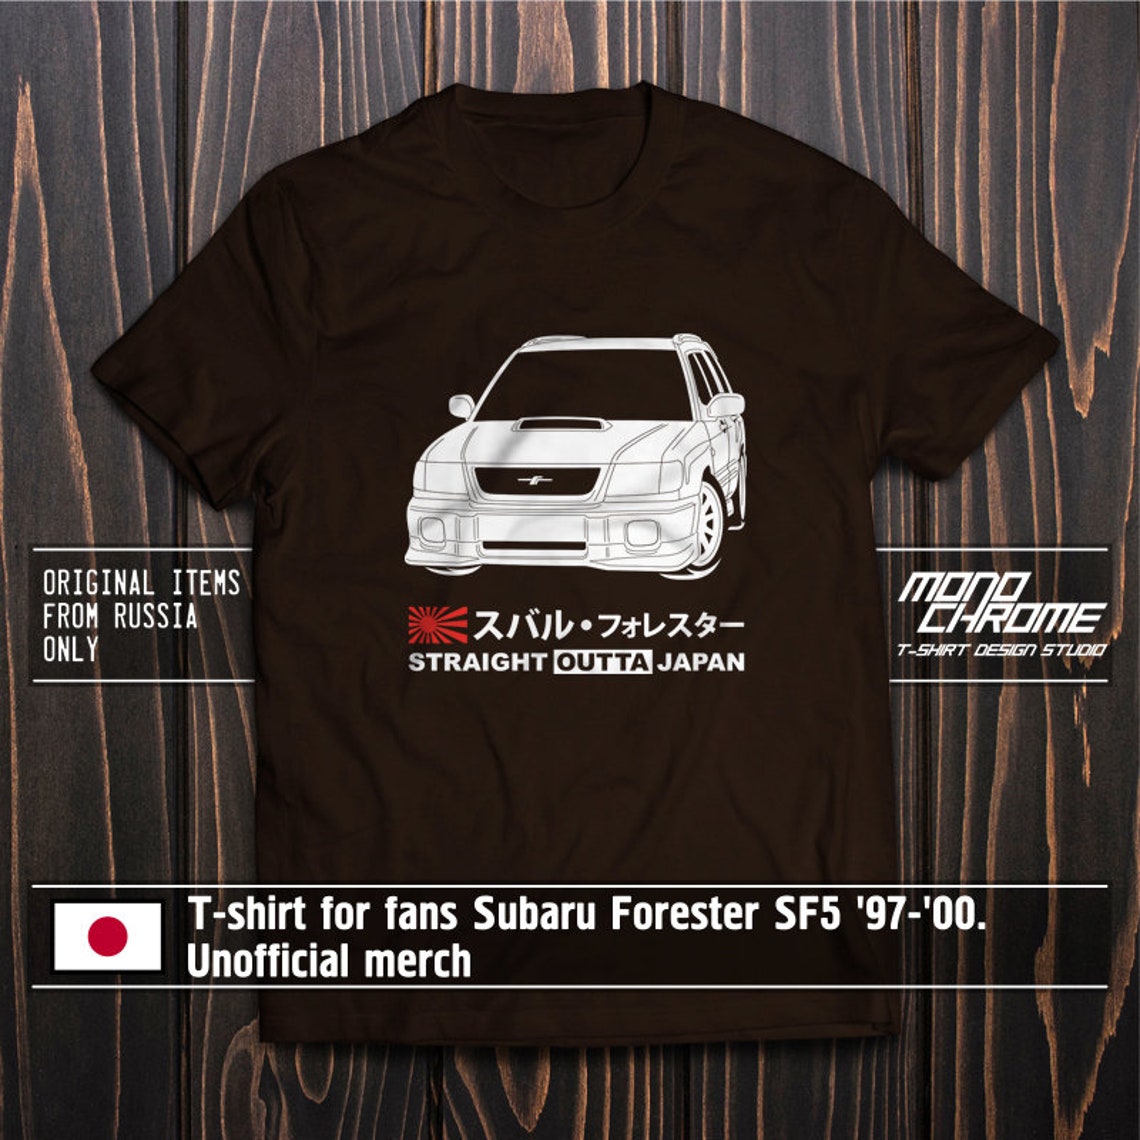 Tshirt for fans Subaru Forester SF5 '97'00. Etsy